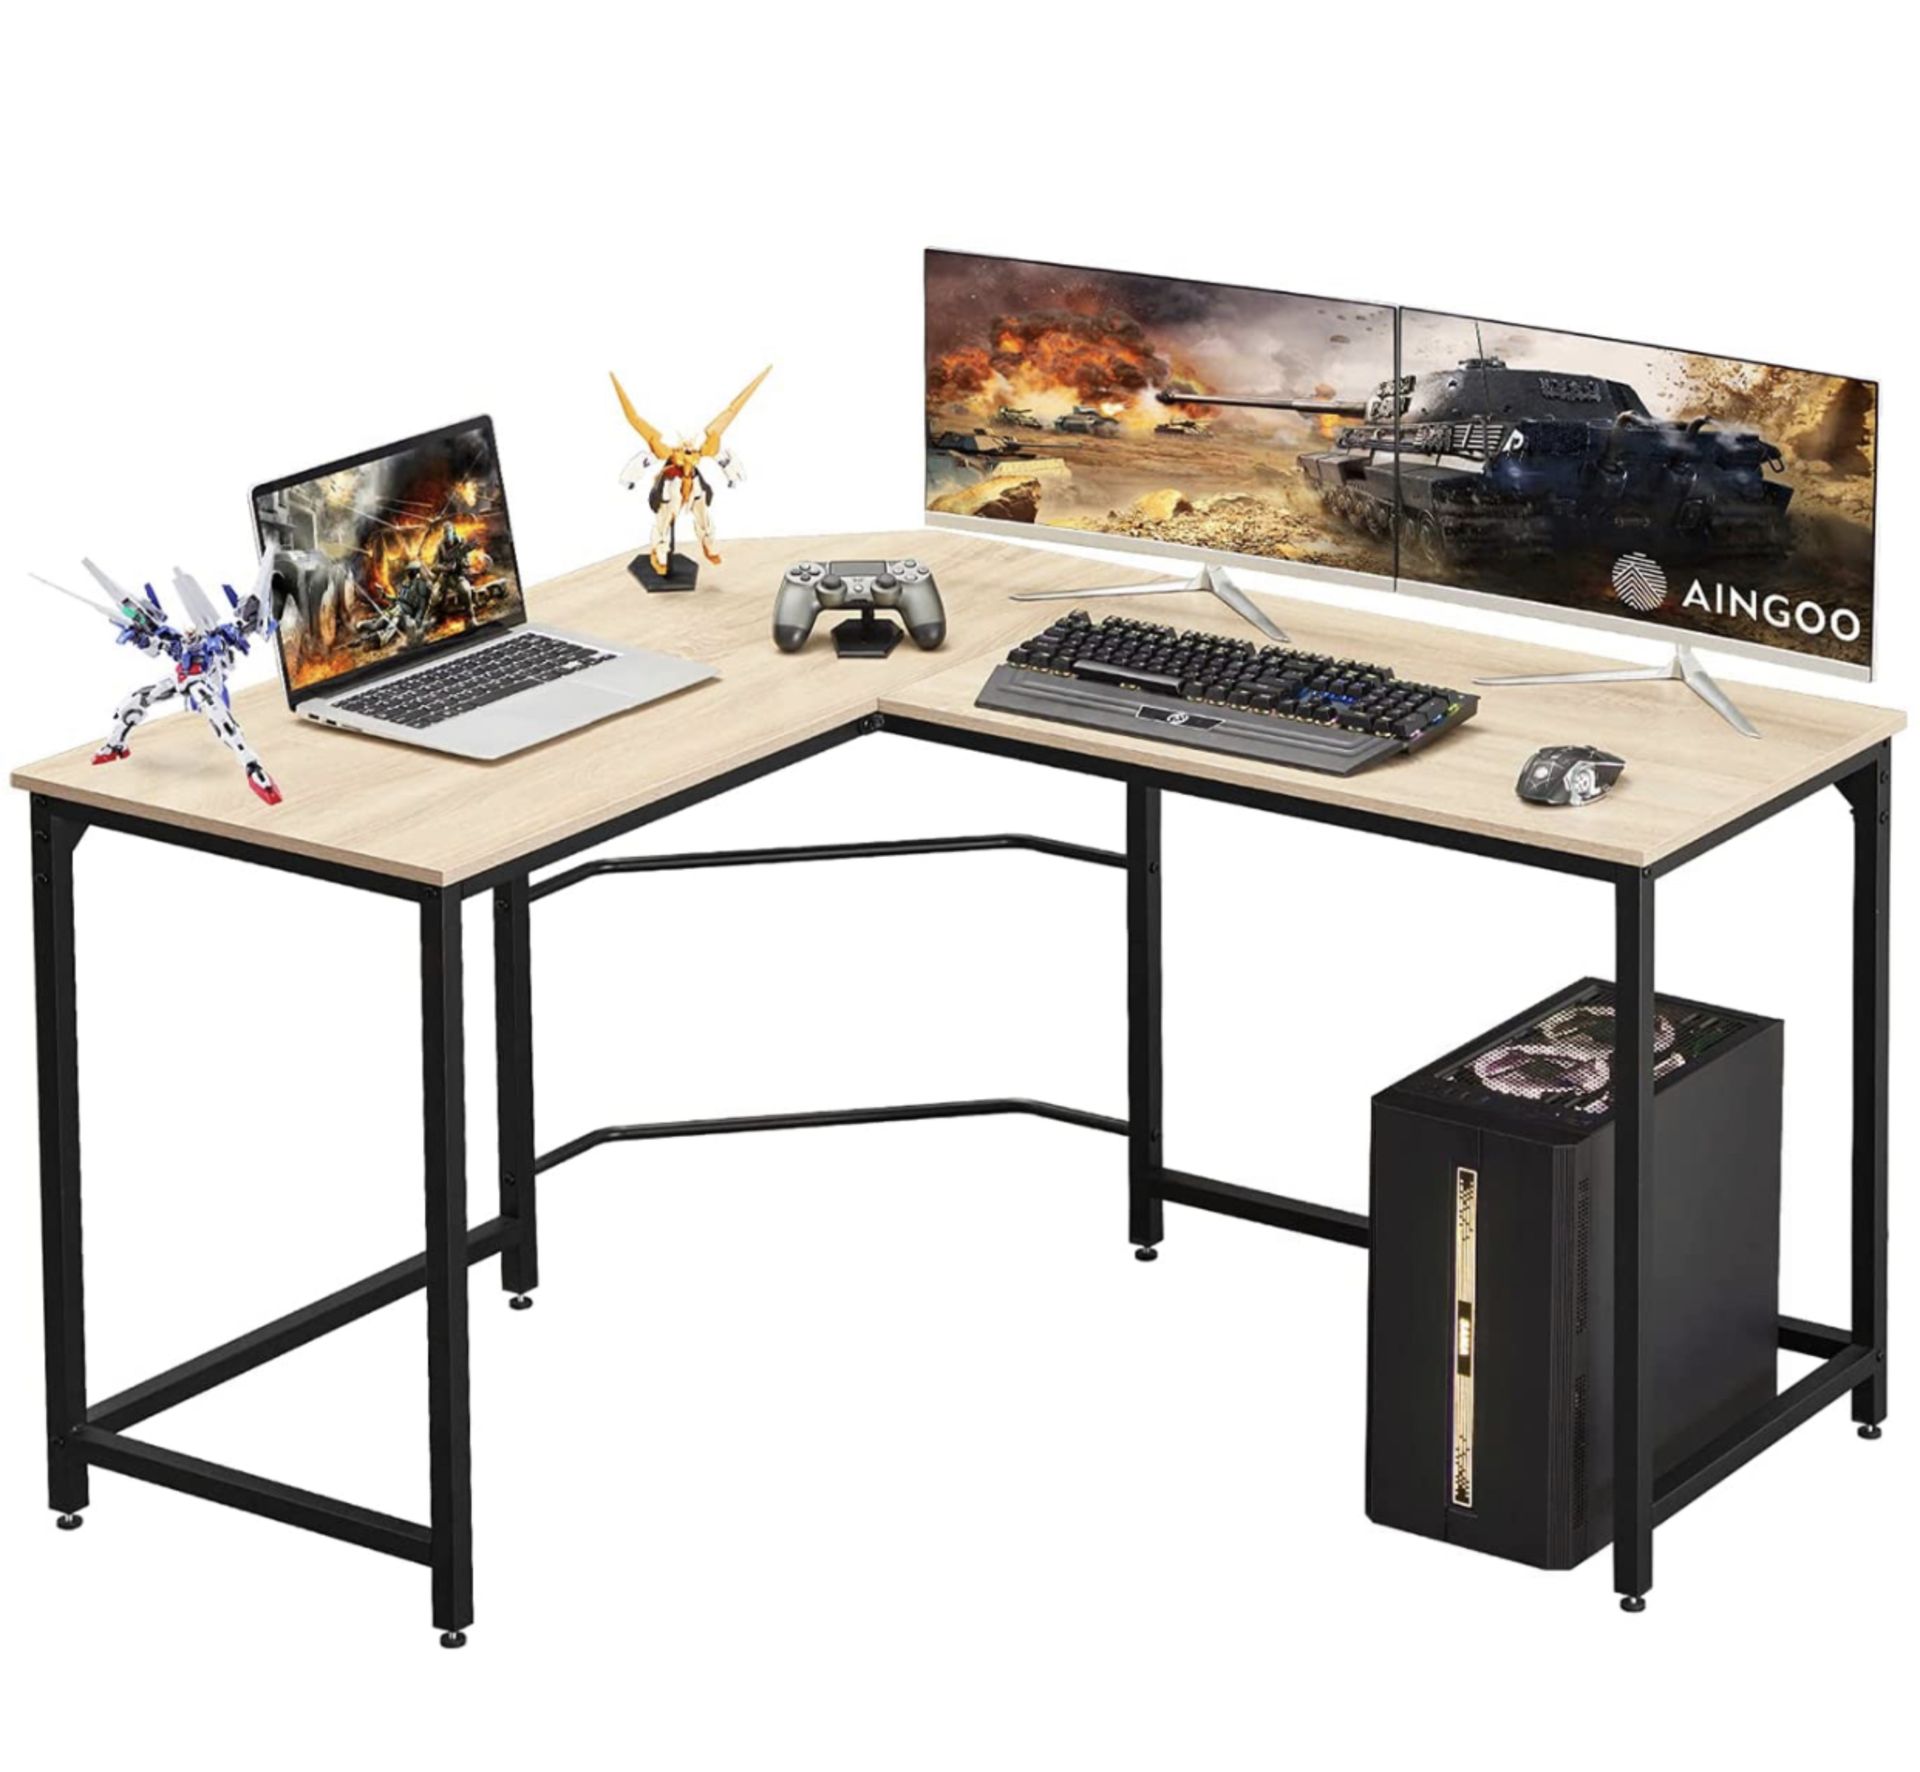 Aingoo Corner Desk L-Shaped Sturdy Office Desk Workstation RRP £85.99